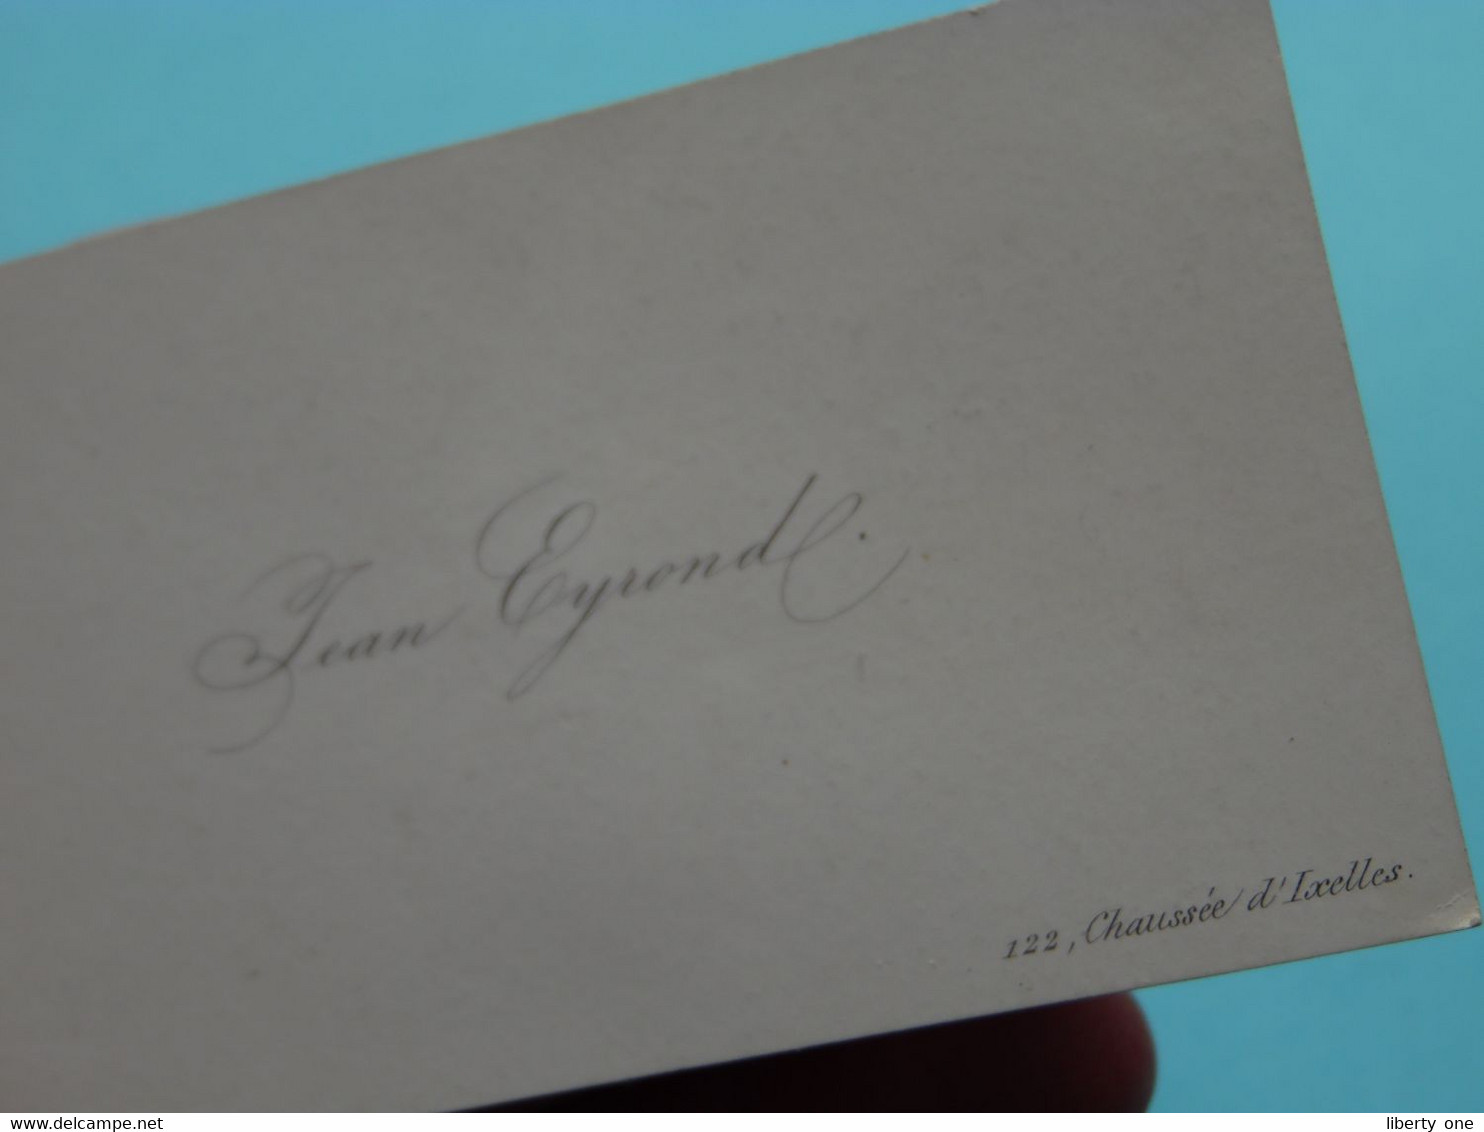 Jean EYROND ( 122 Chaussée D'Ixelles ) > ( Porcelein Porcelaine Porzellan ) ! - Visiting Cards